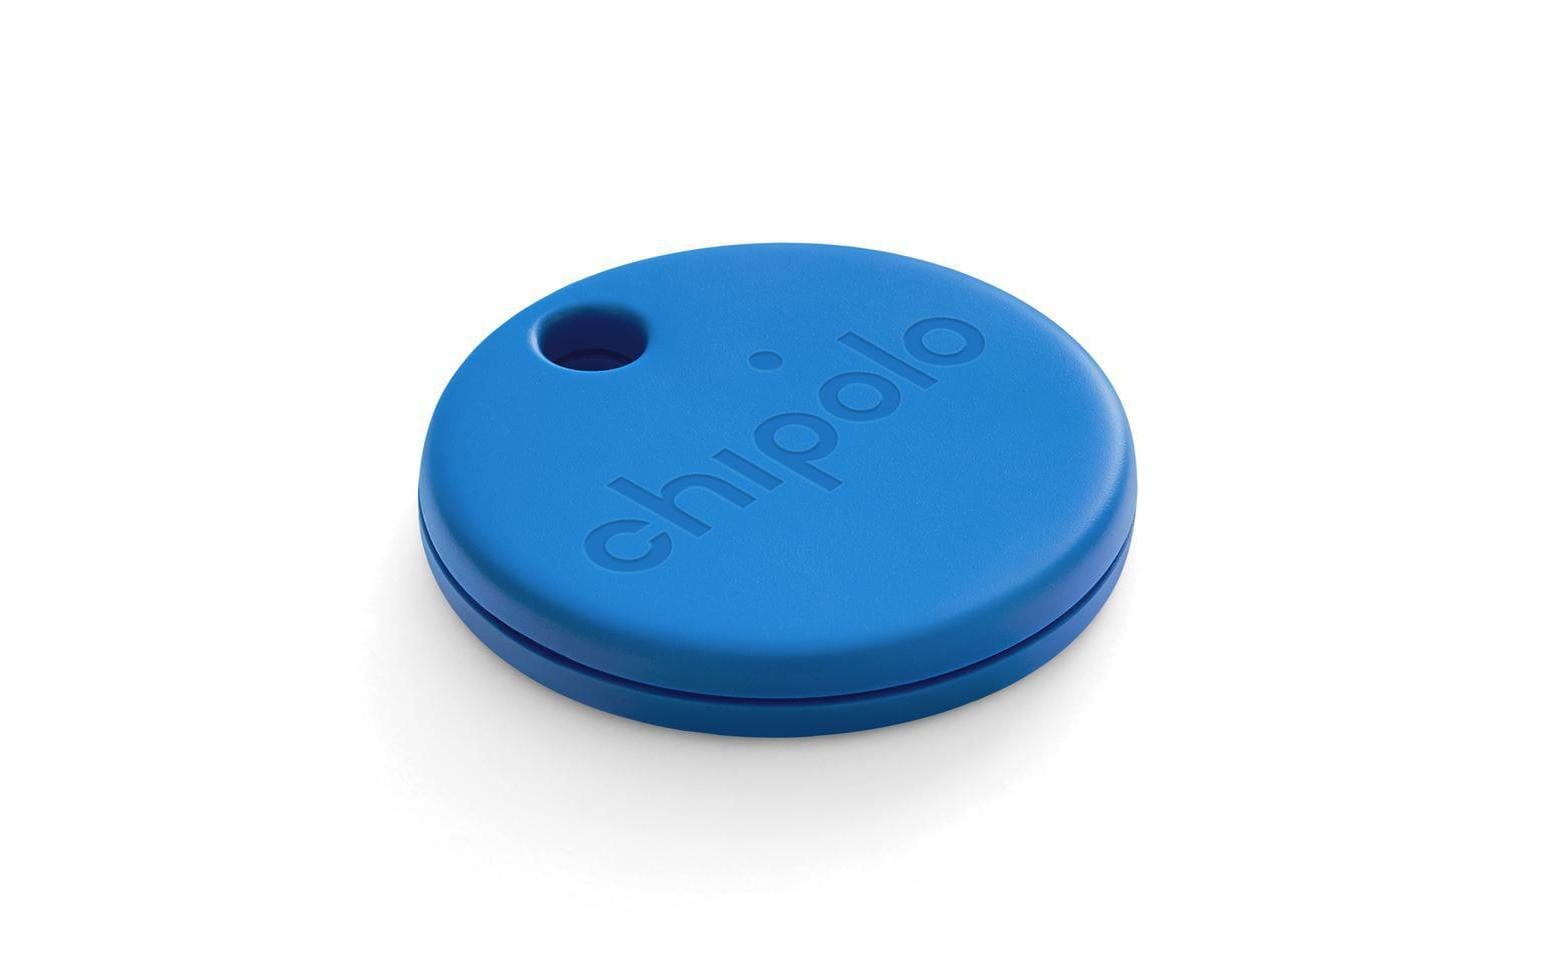 Chipolo GPS-Ortungsgerät »ONE Blau«